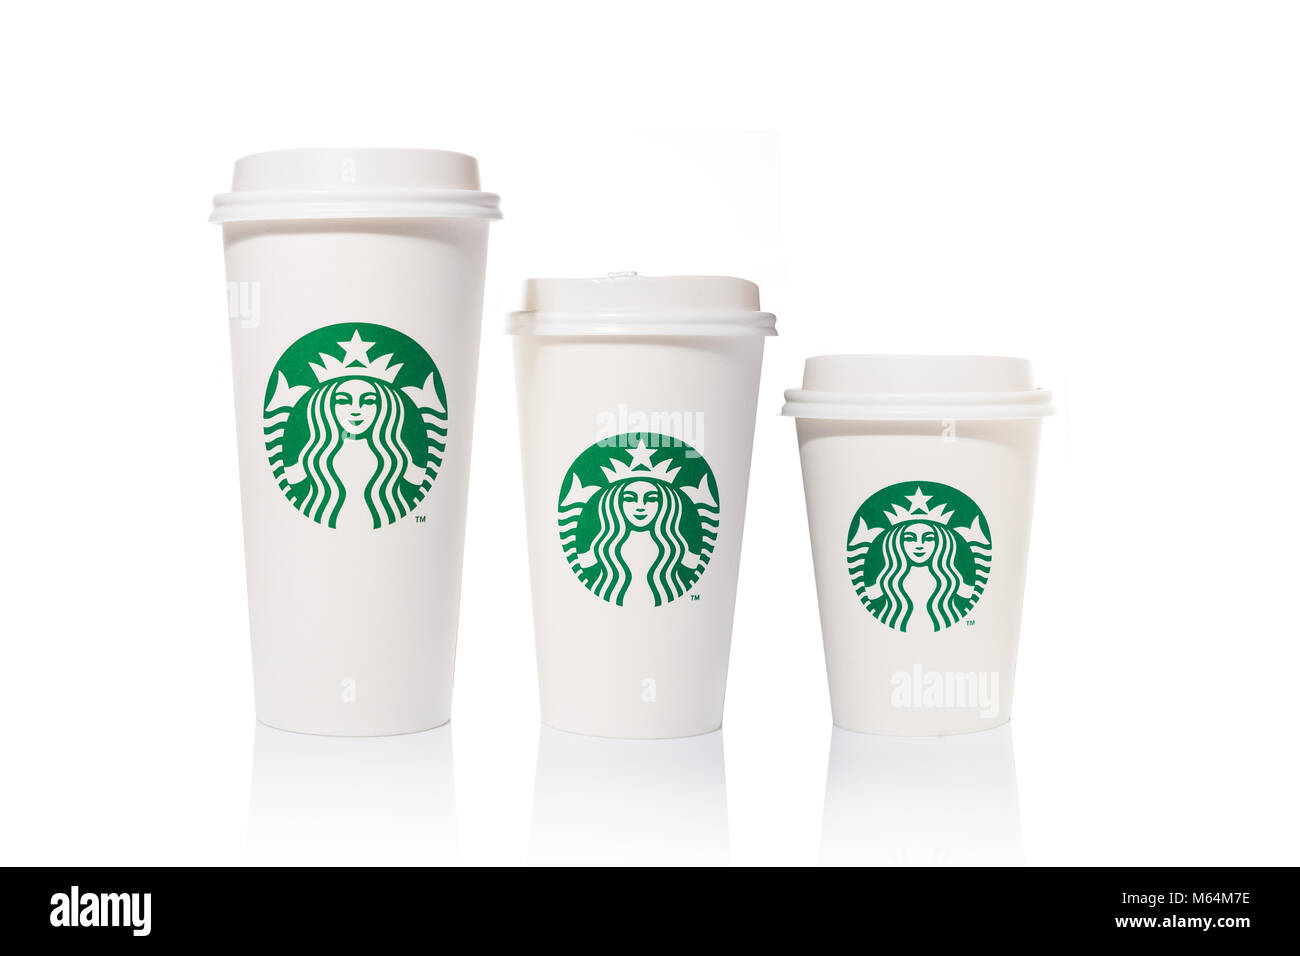 Libro blanco tazas de café de Starbucks en 3 tamaños sobre fondo blanco. Foto de stock